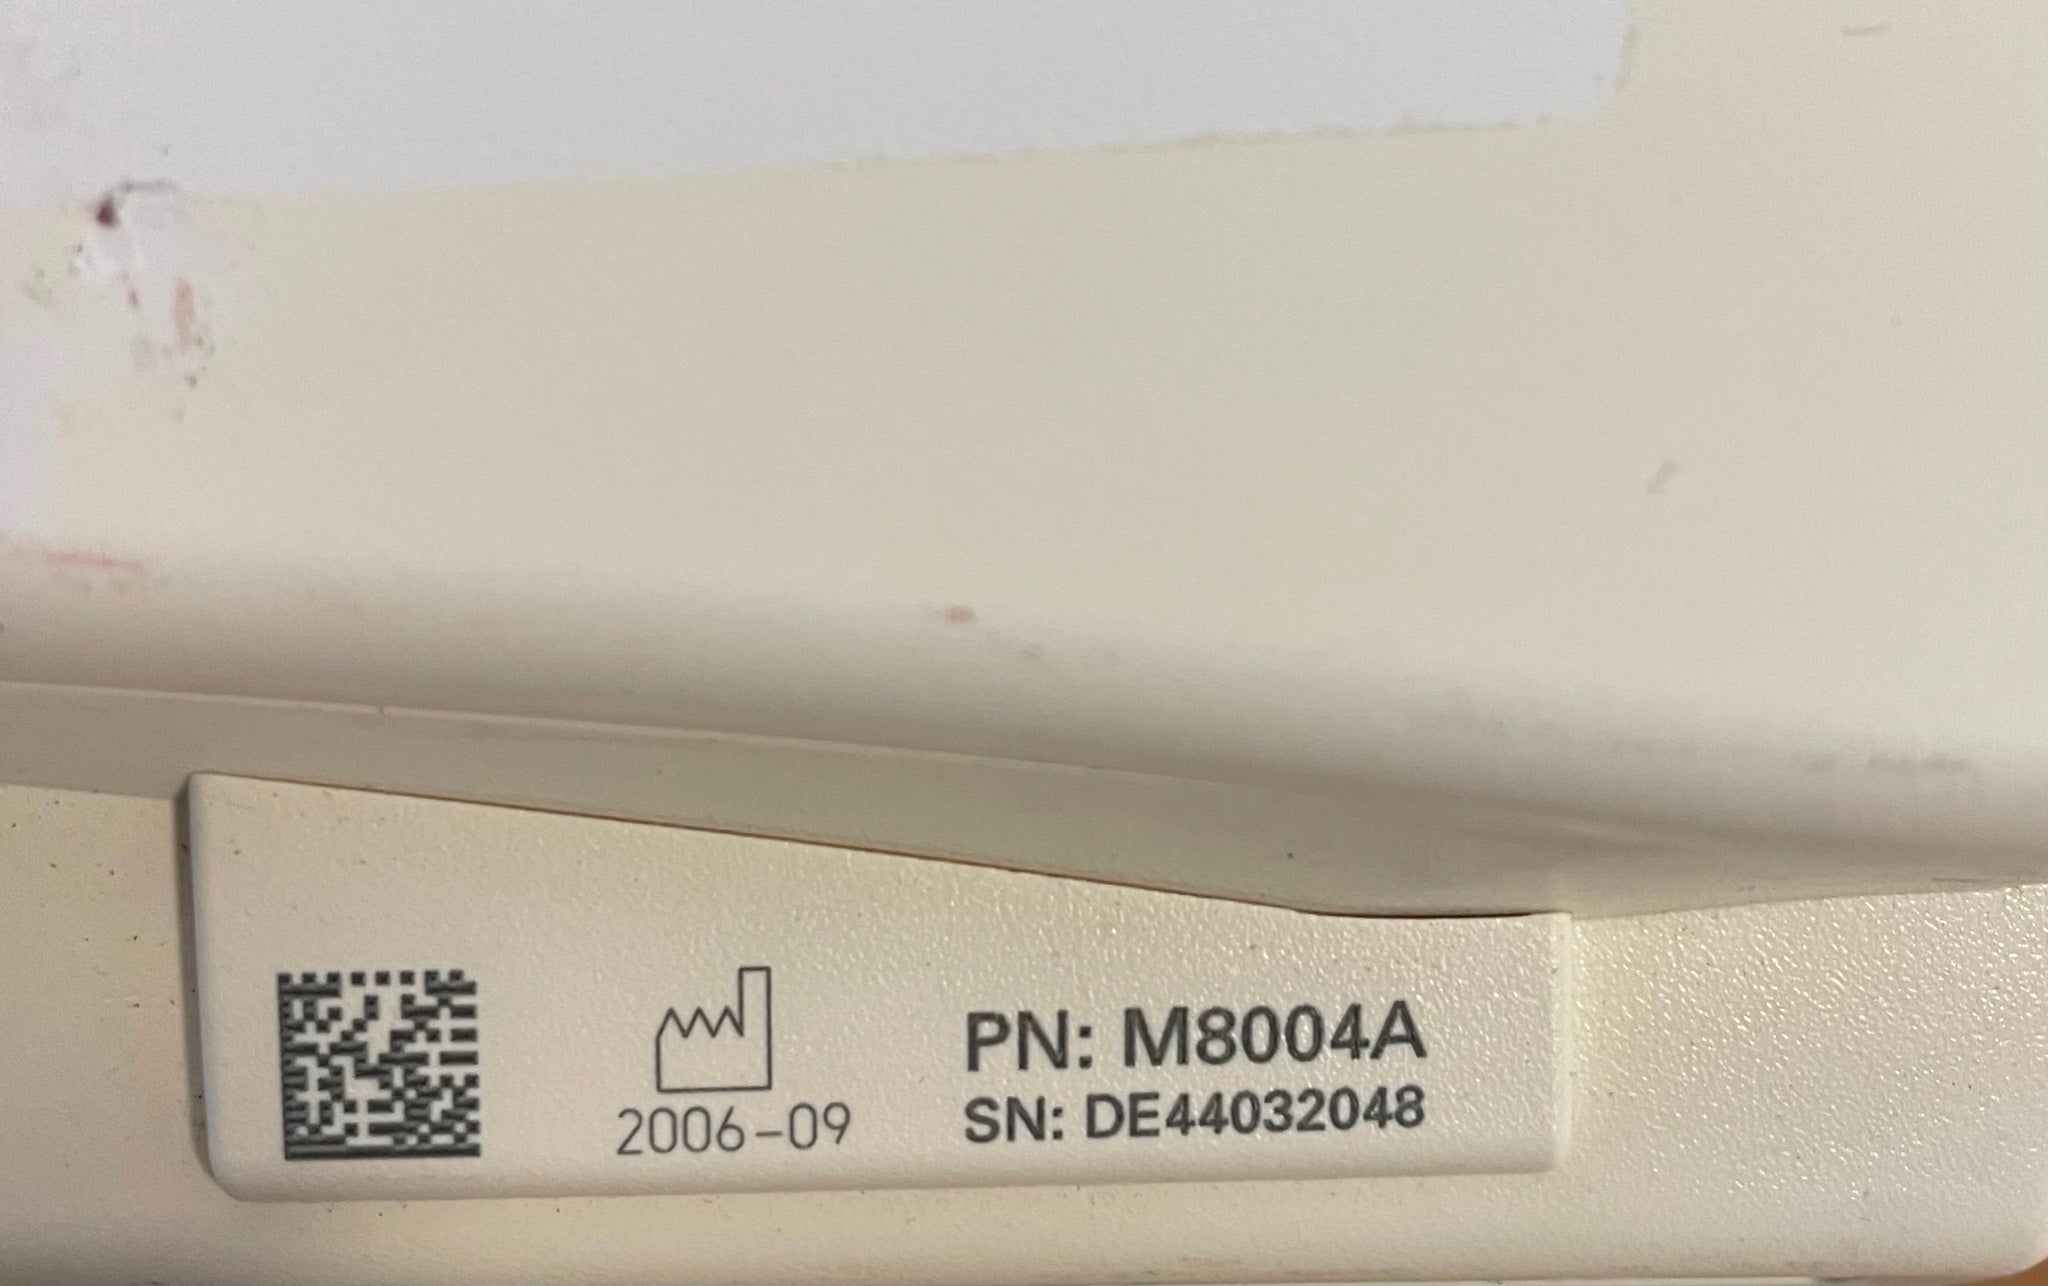 Philips Intellivue MP50 Patient Monitor SN:DE44032048 REF:M8004A DIAGNOSTIC ULTRASOUND MACHINES FOR SALE